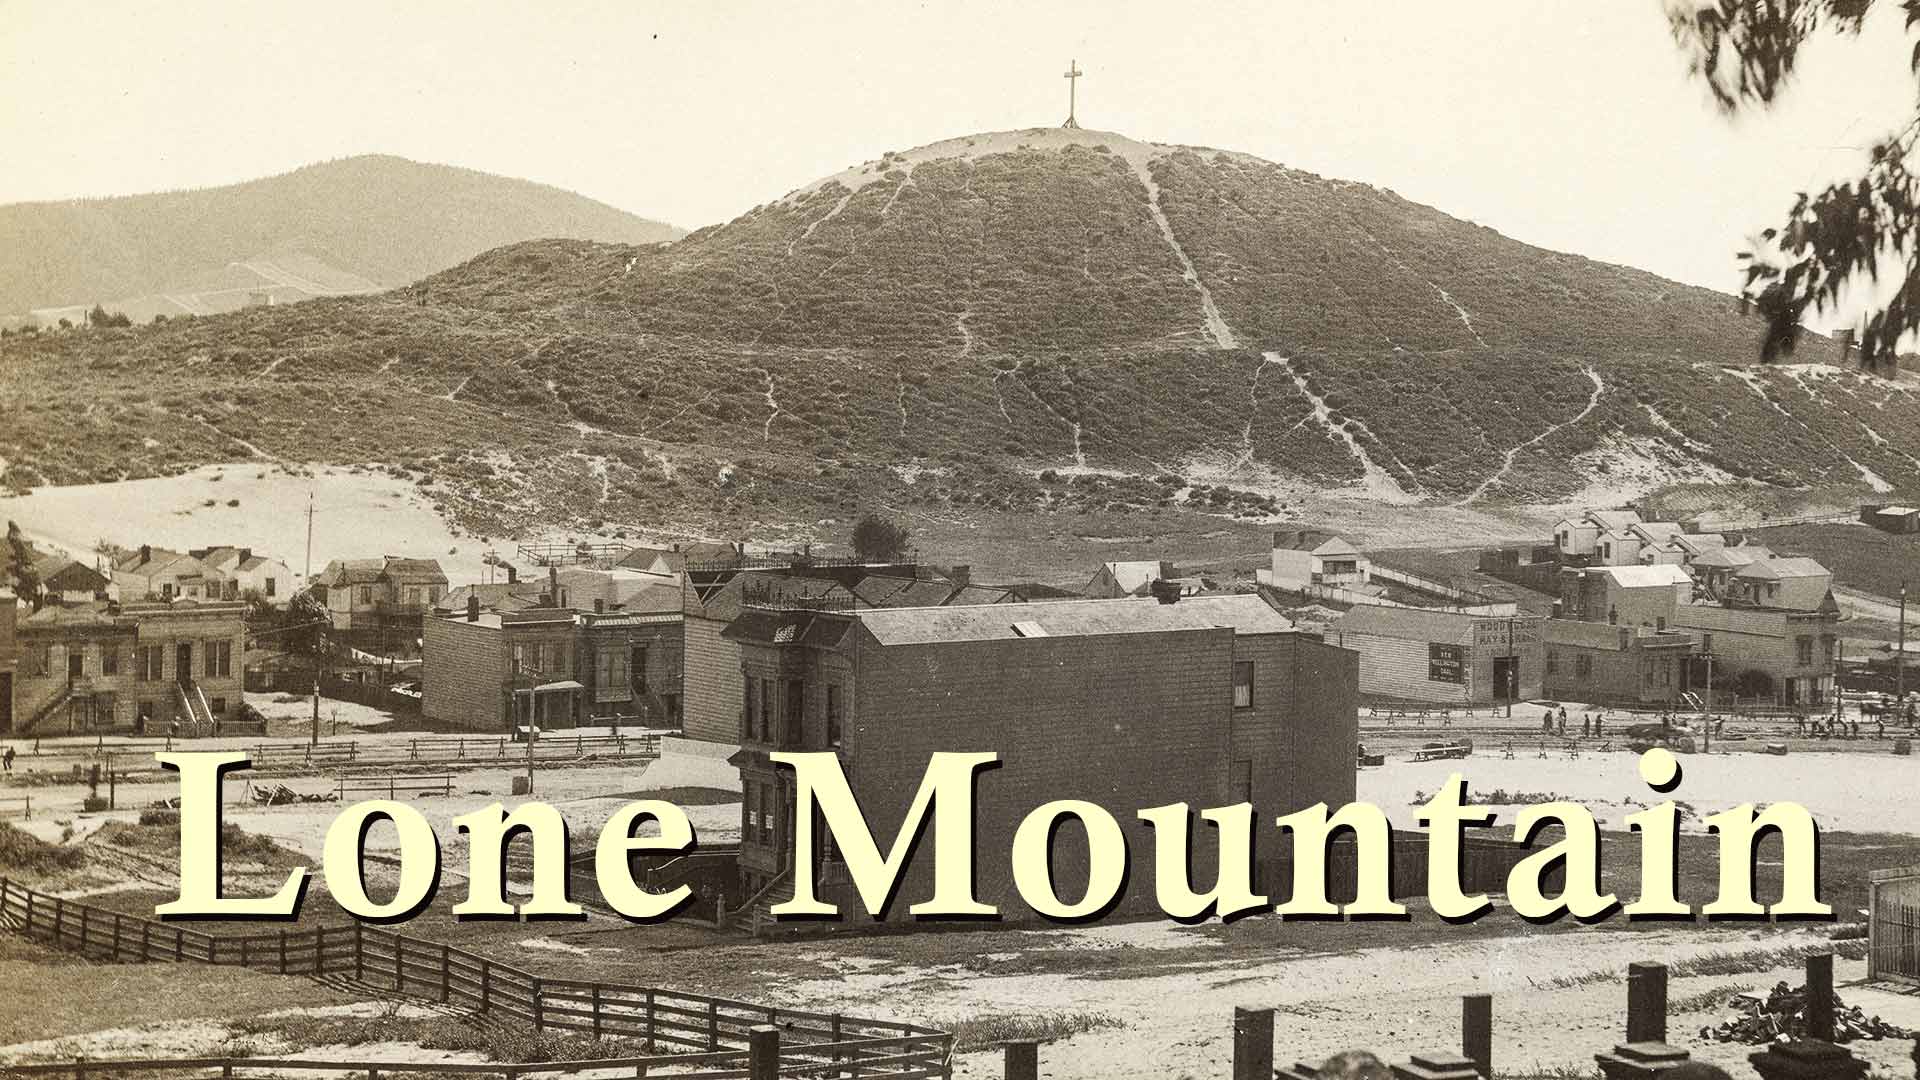 Lone Mountain